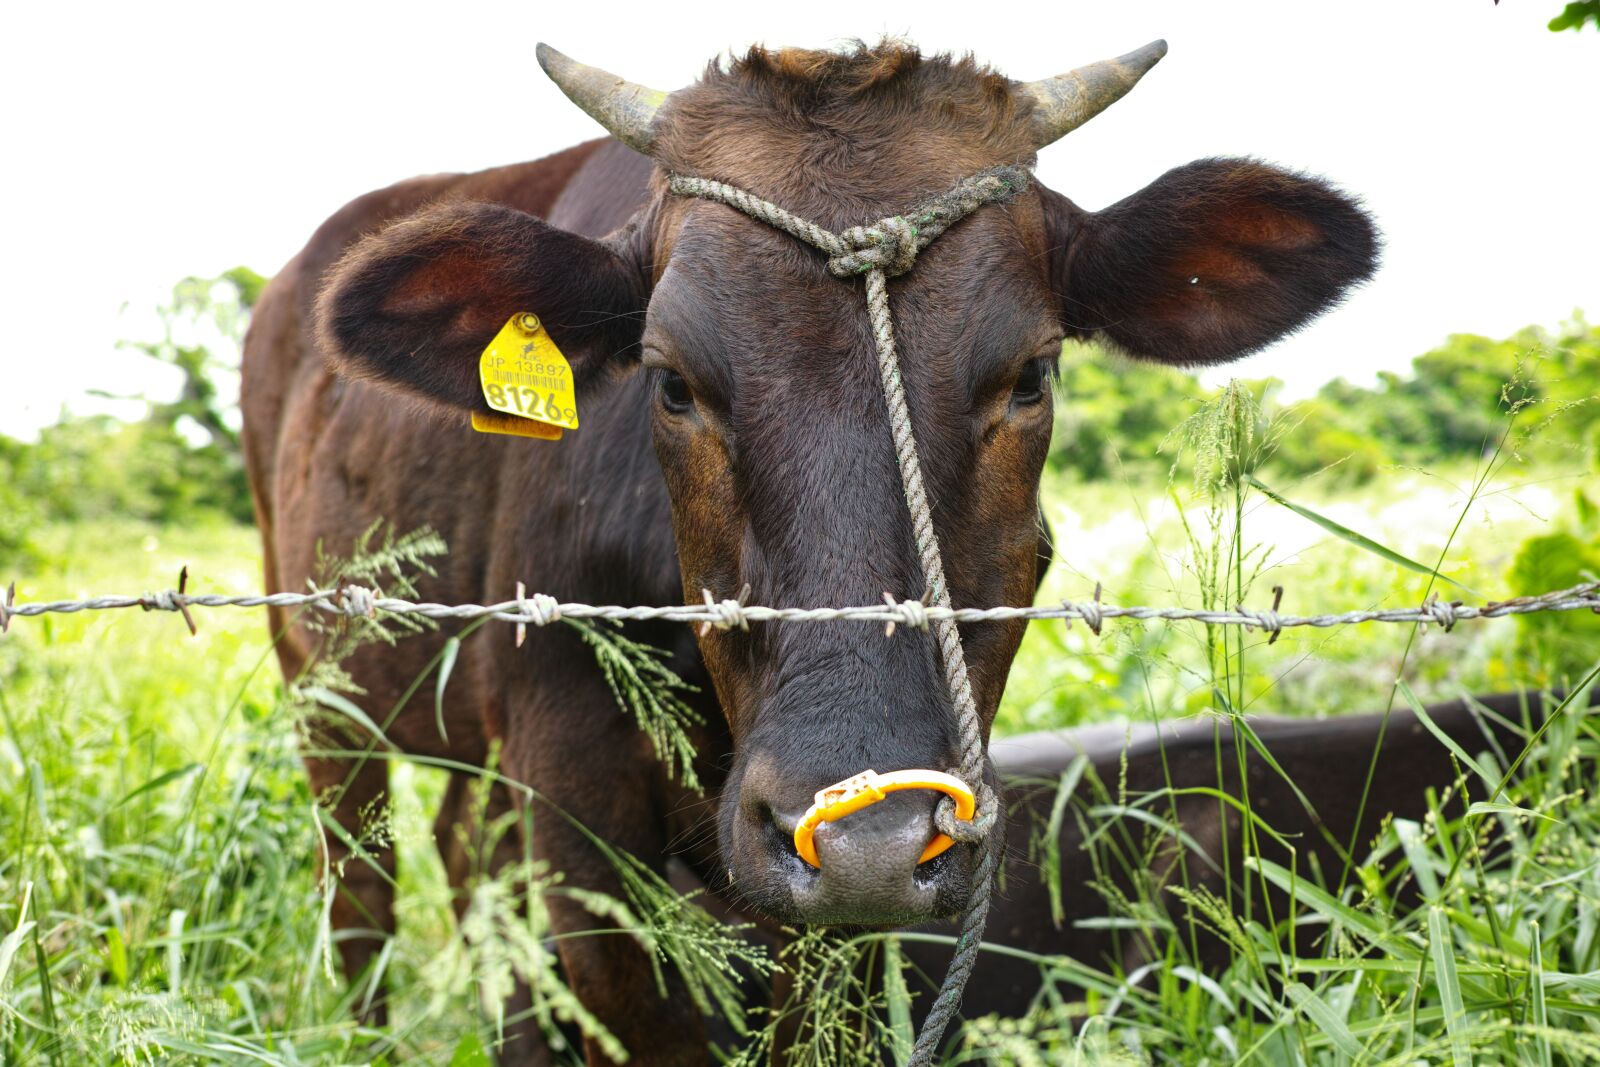 Sigma DP2 Merrill sample photo. Cow, ranch, face photography